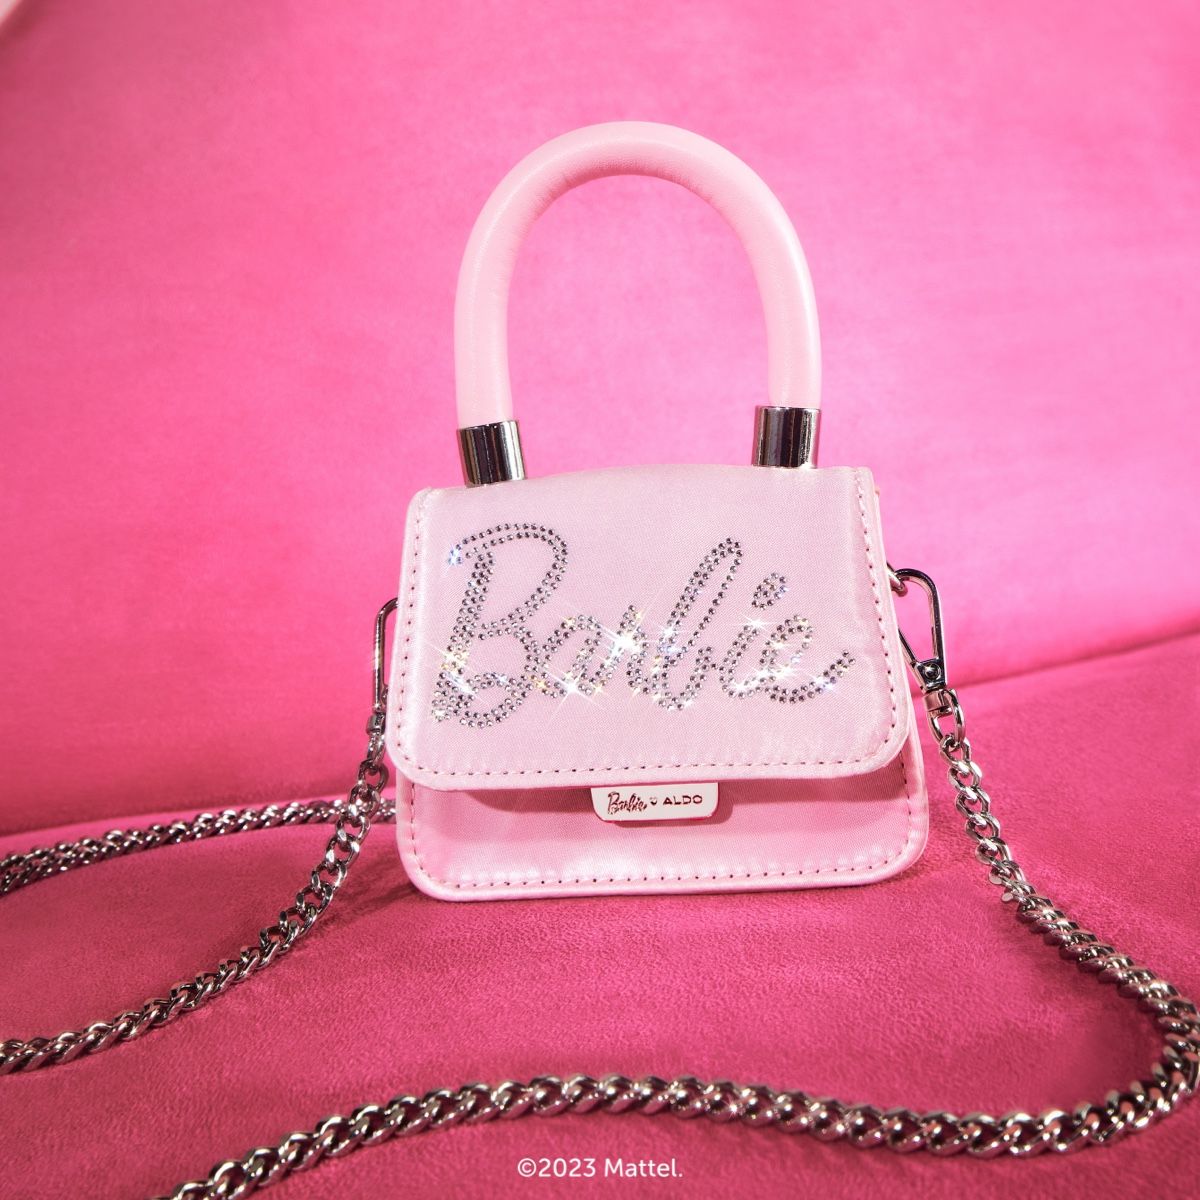 Barbiehandbg Light Pink Women's Barbie | ALDO US